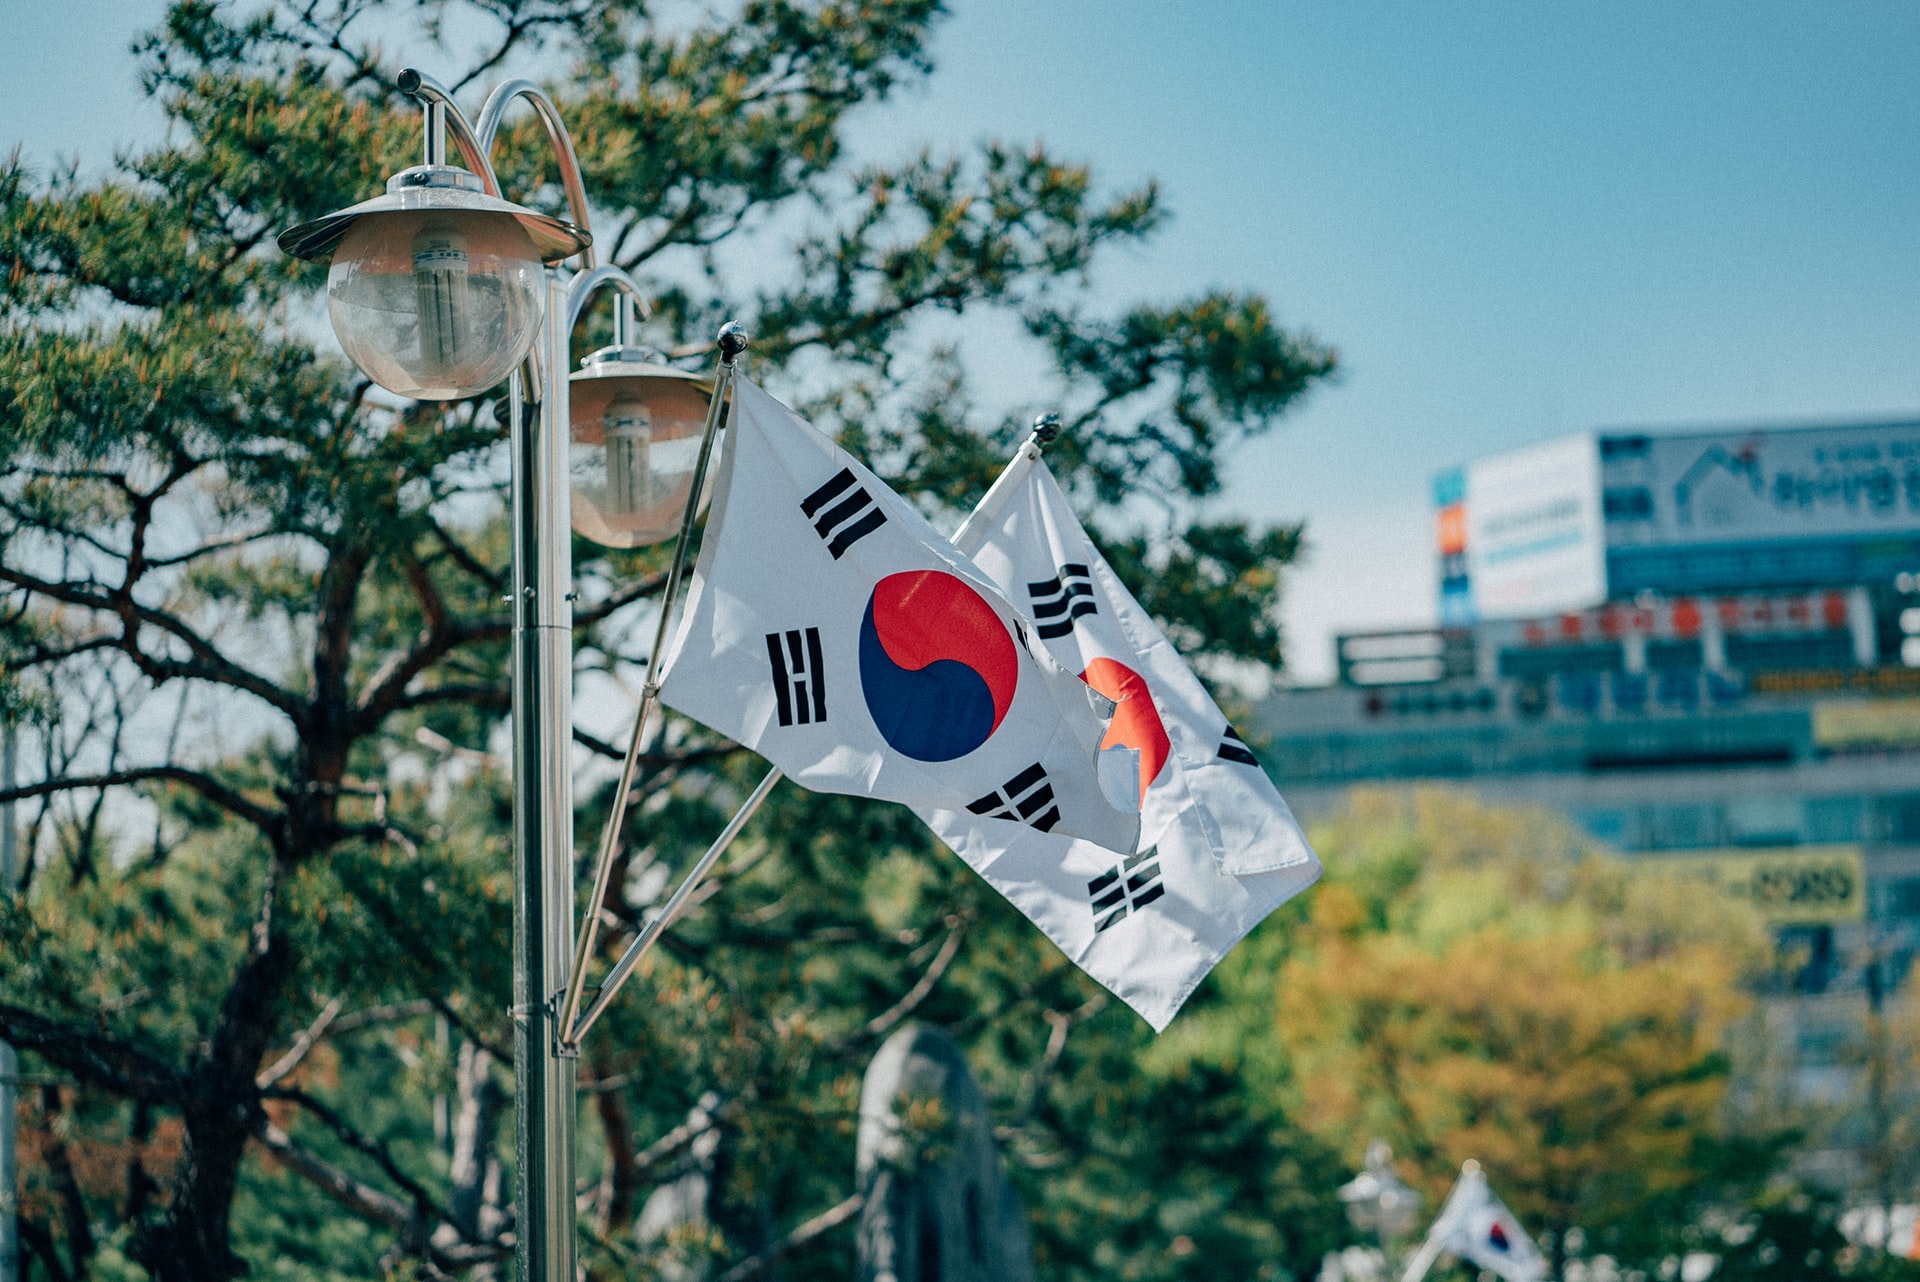 Pasantía (GIFT) Pagada Para Latinos en Corea del Sur